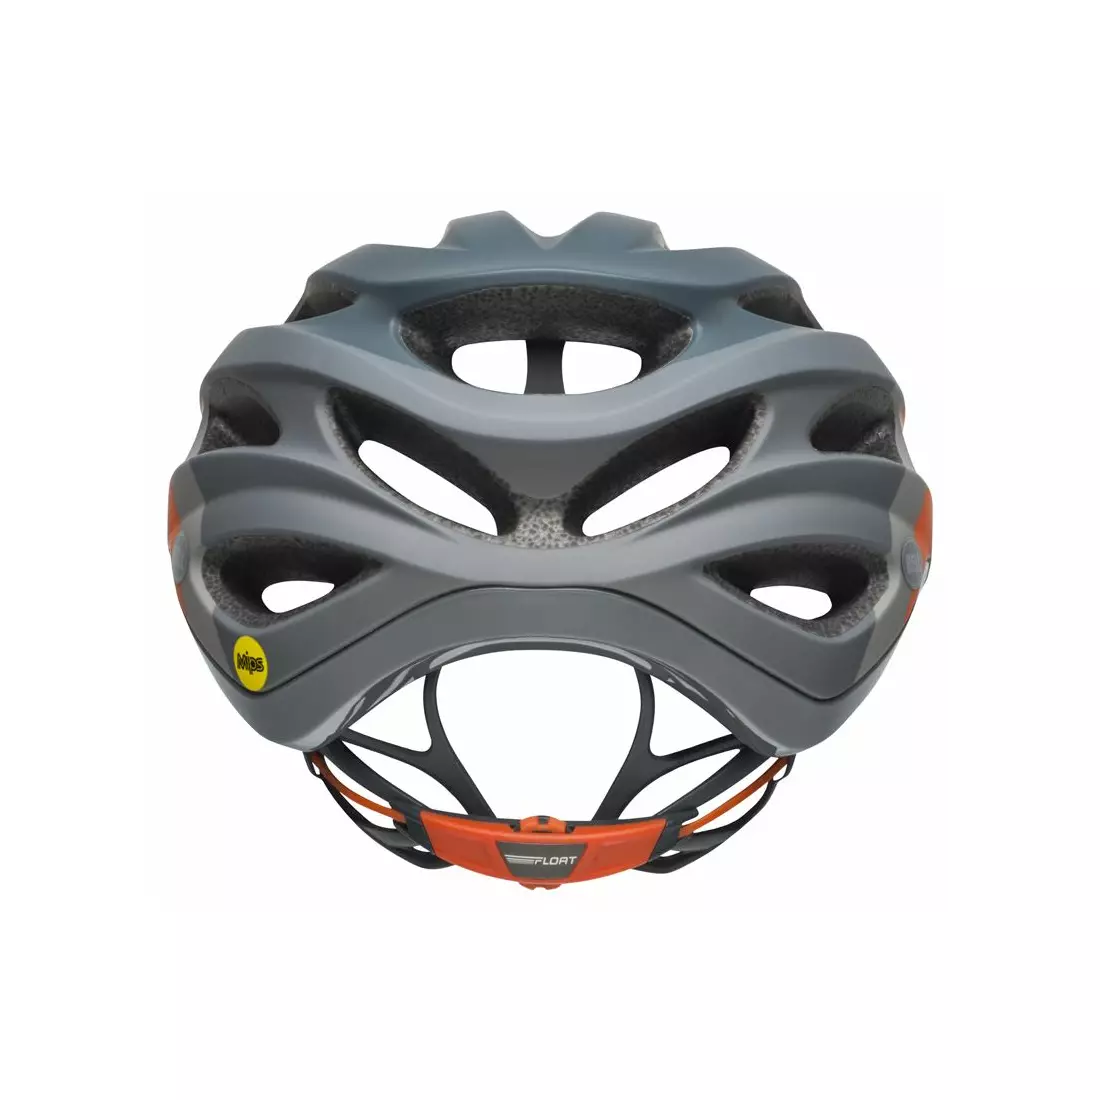 Cyklistická helma mtb BELL DRIFTER logic matte gloss slate gray orange 